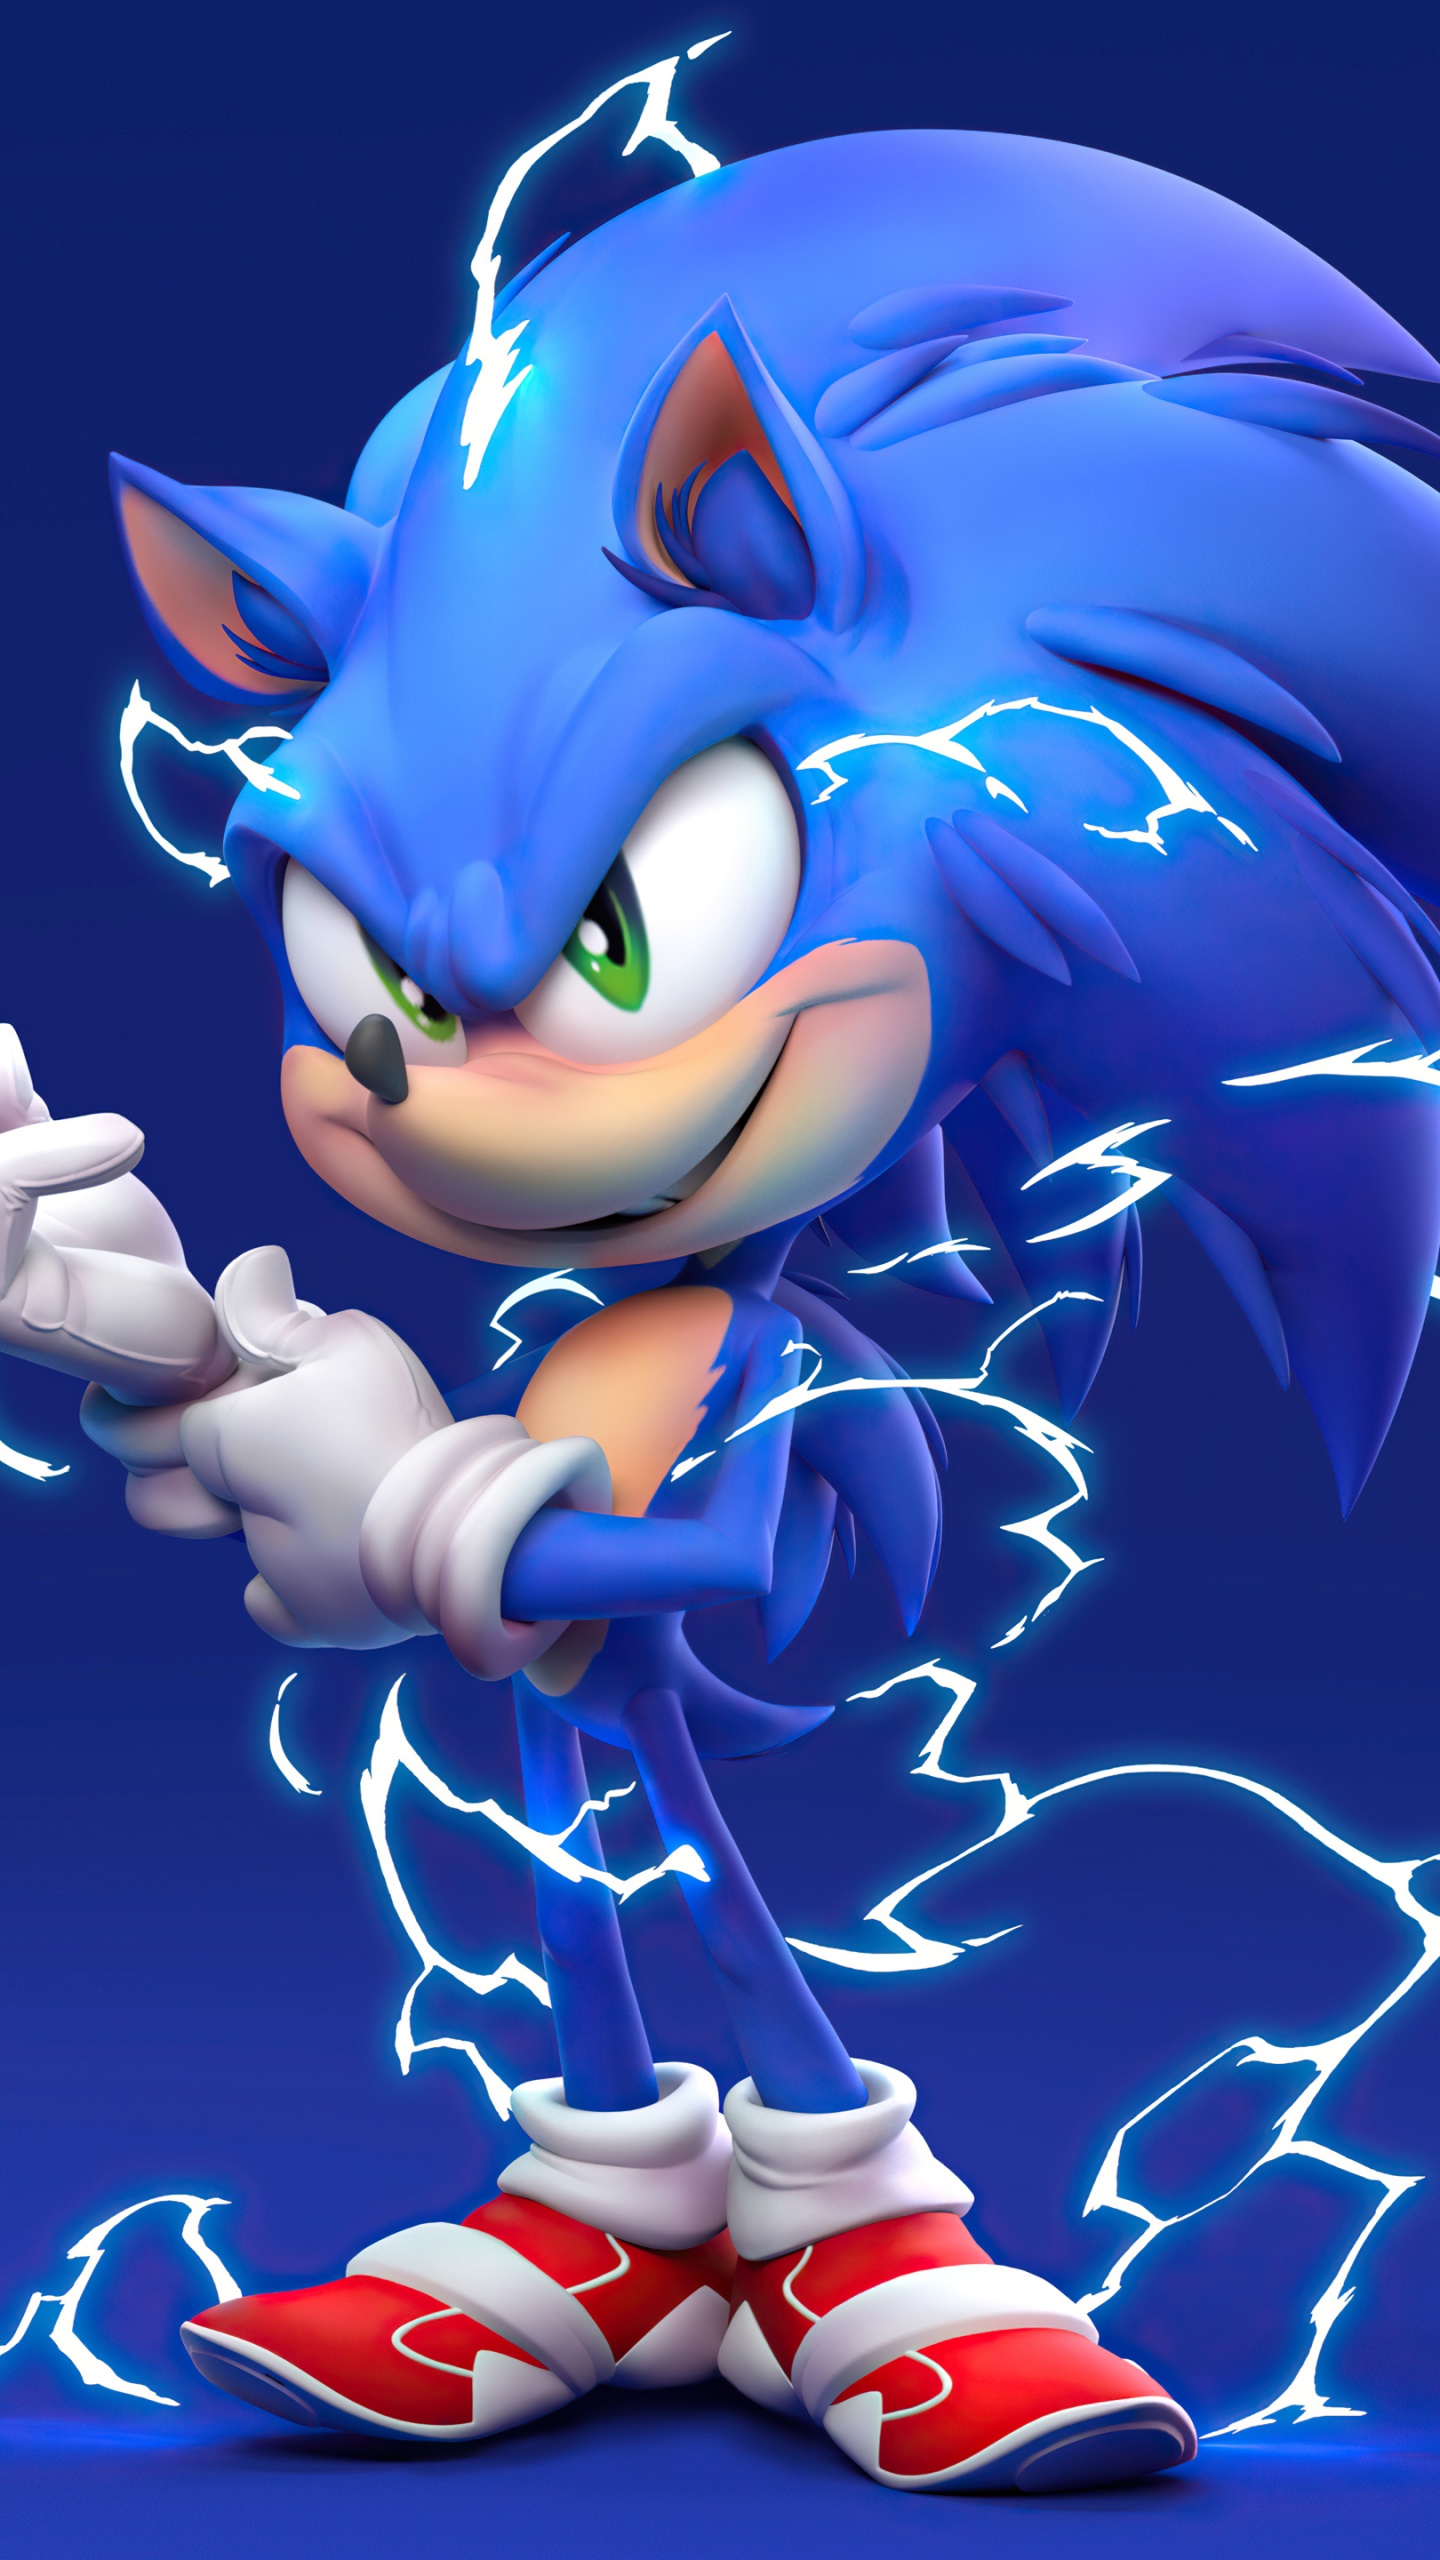 Sonic the Hedgehog Wallpaper 4K, Blue background, 5K, Movies